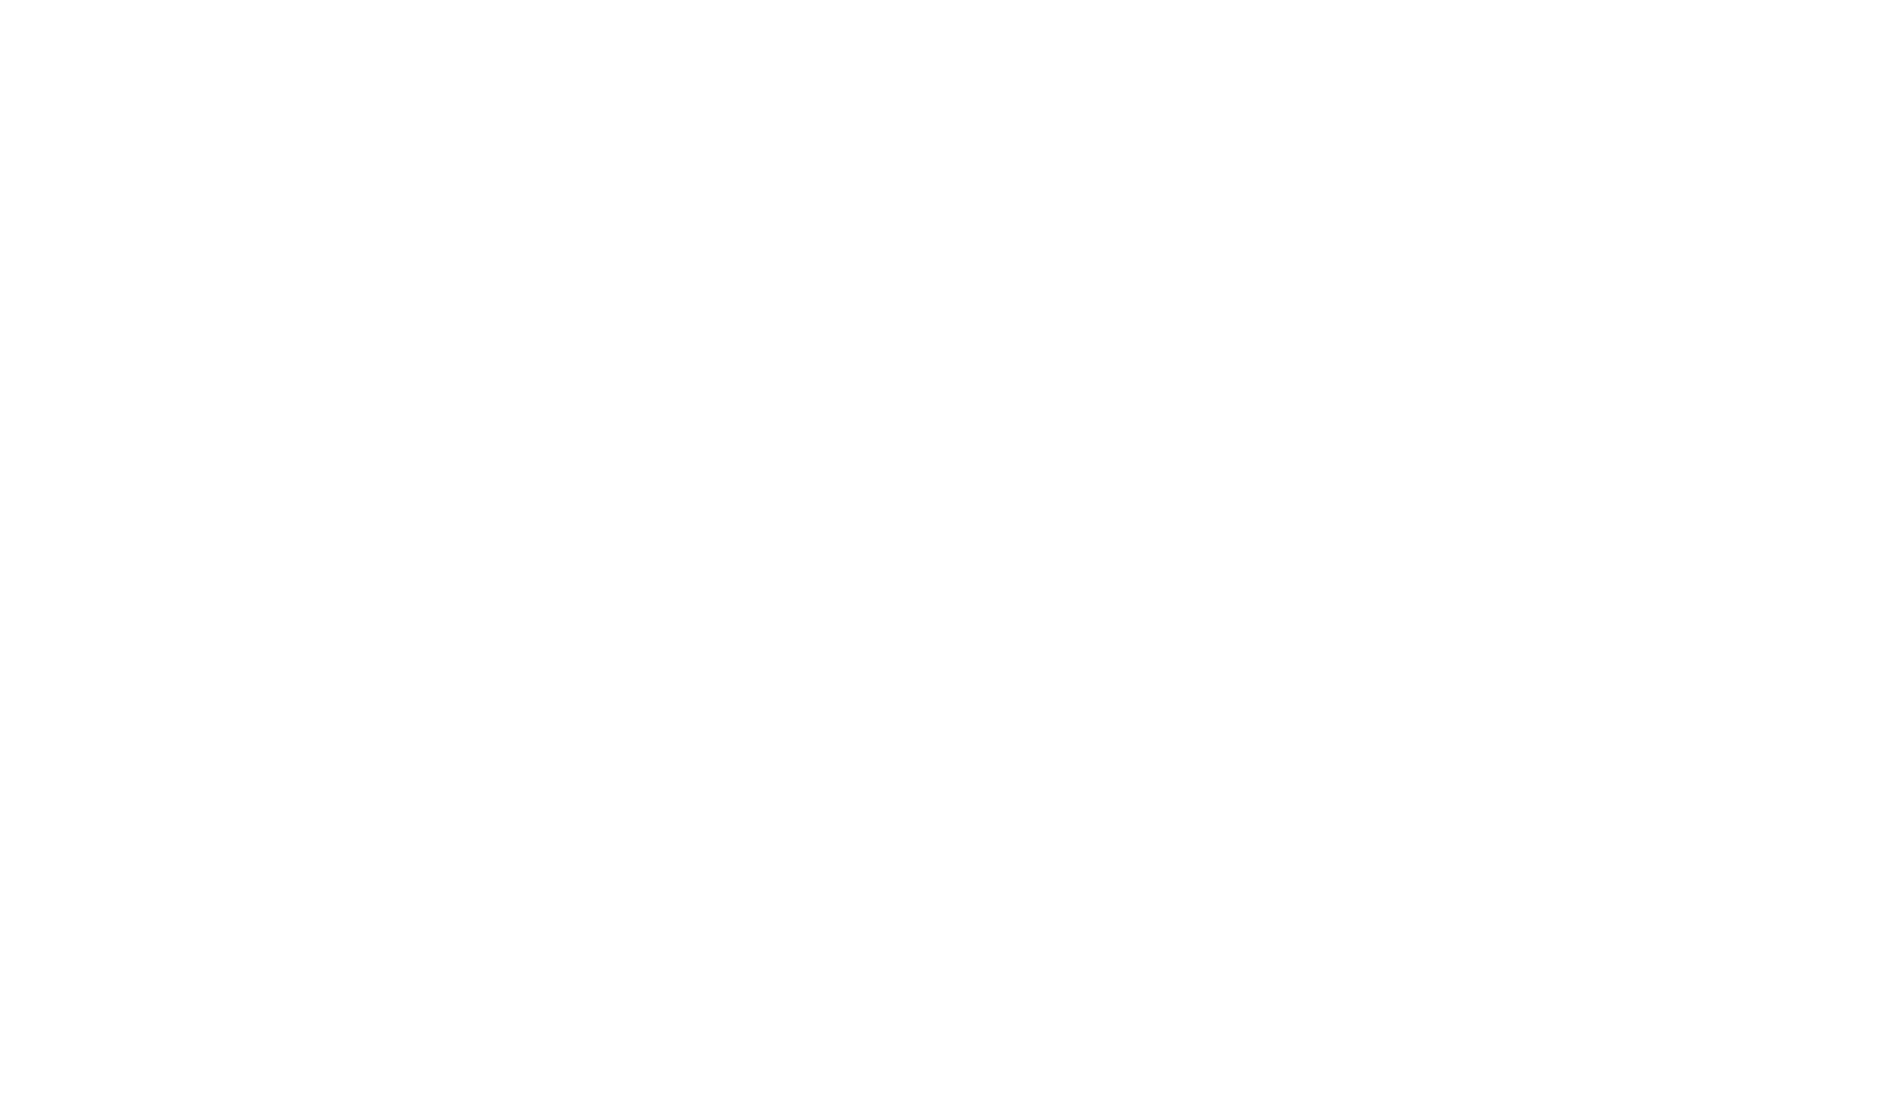 Print House Costa Rica